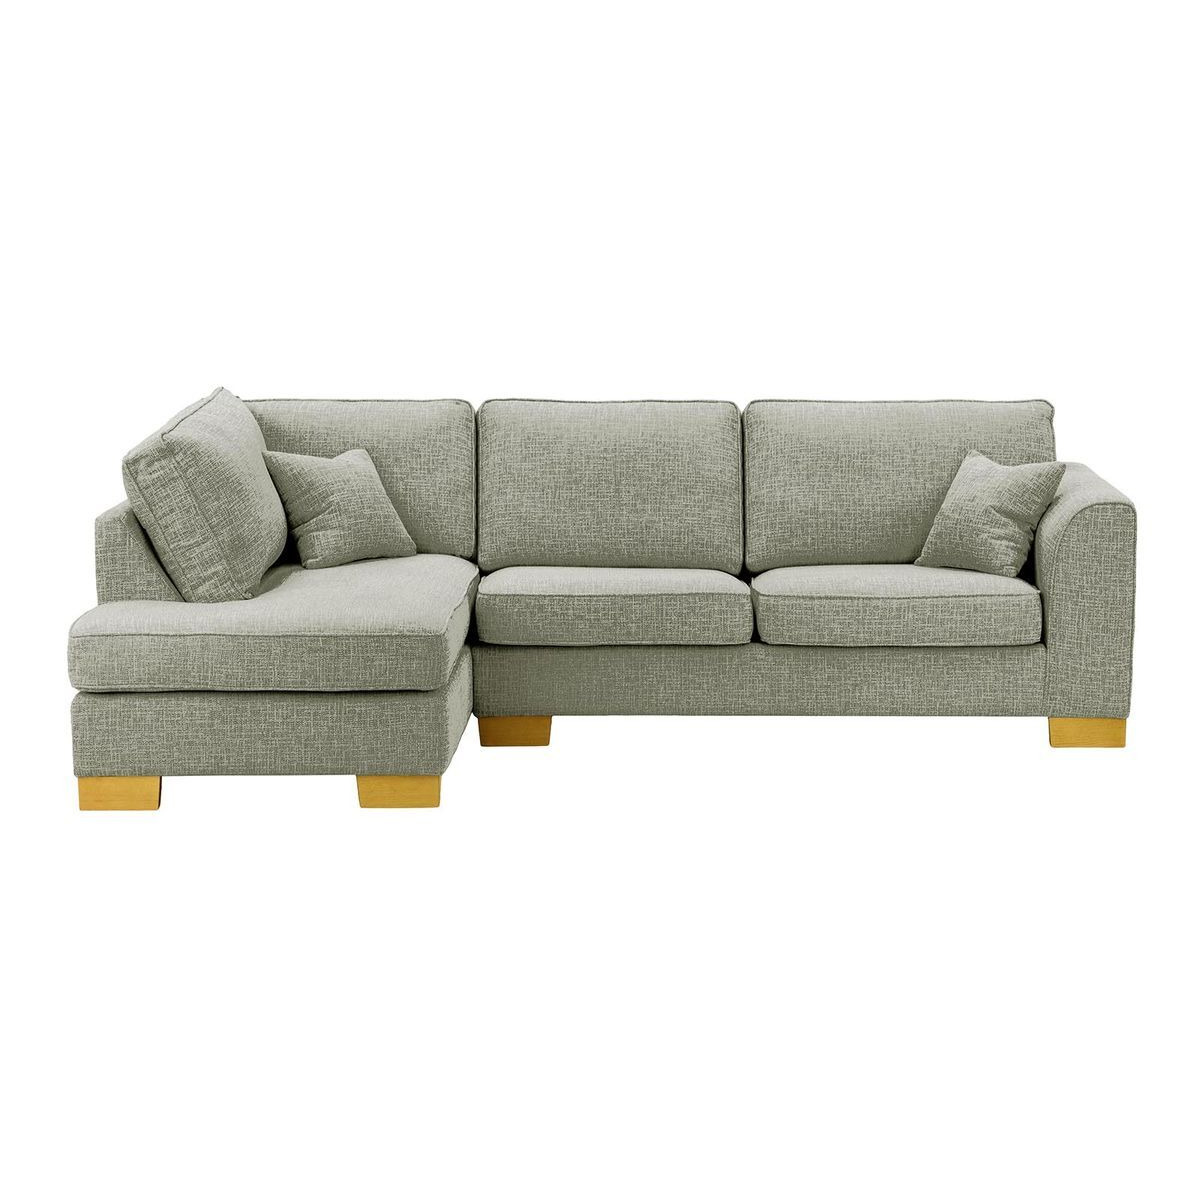 Avos Left Hand Corner Sofa Bed, grey, Leg colour: dark oak - image 1